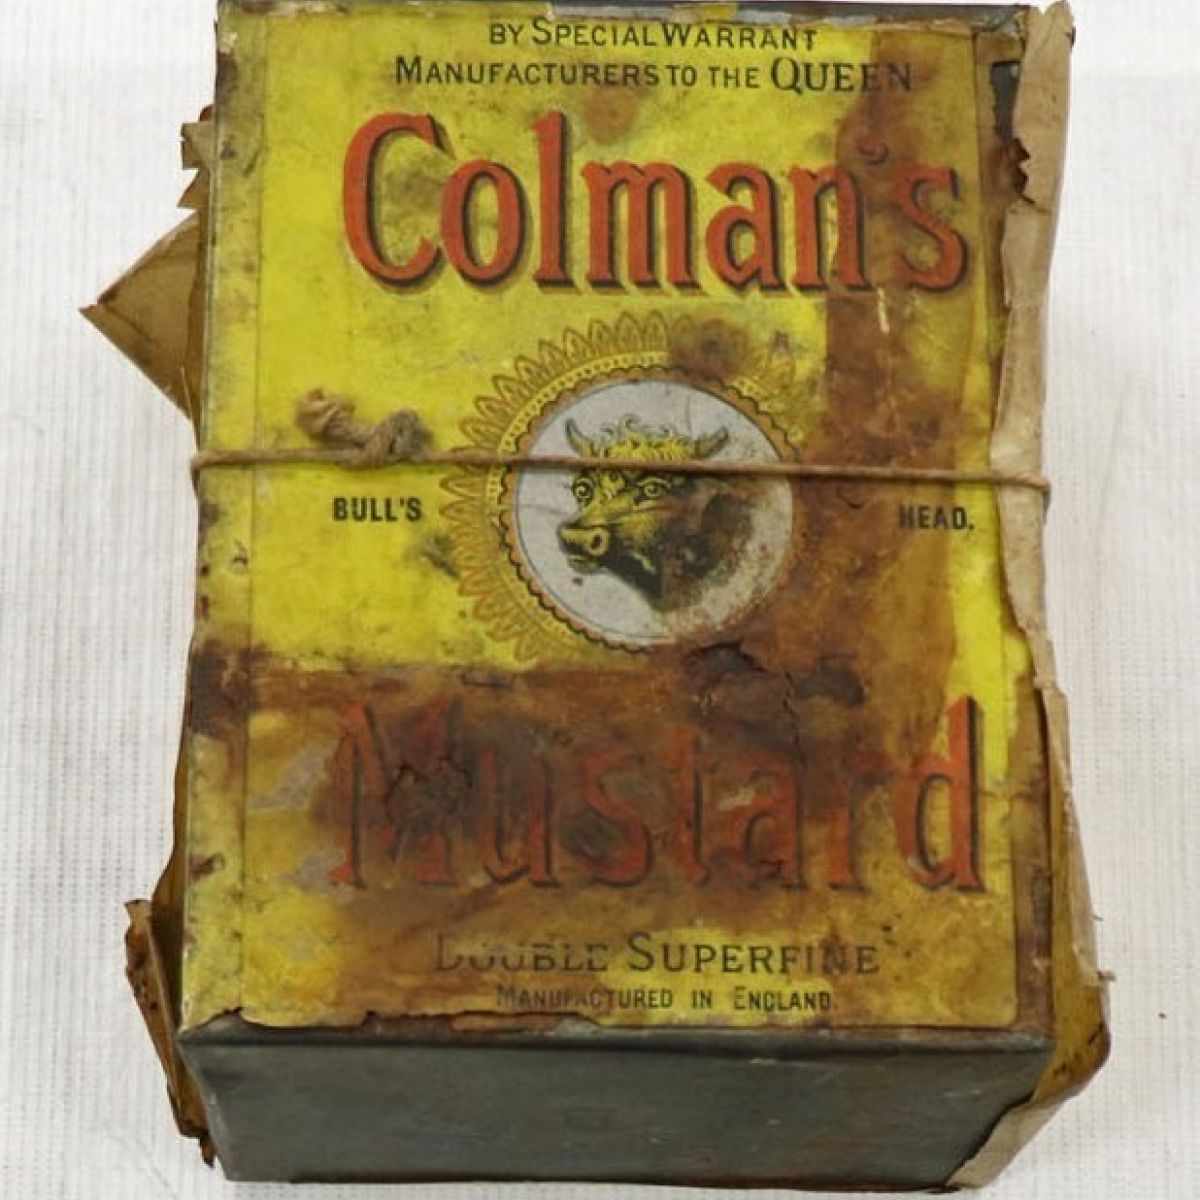 A Colman's mustard tin before treatment